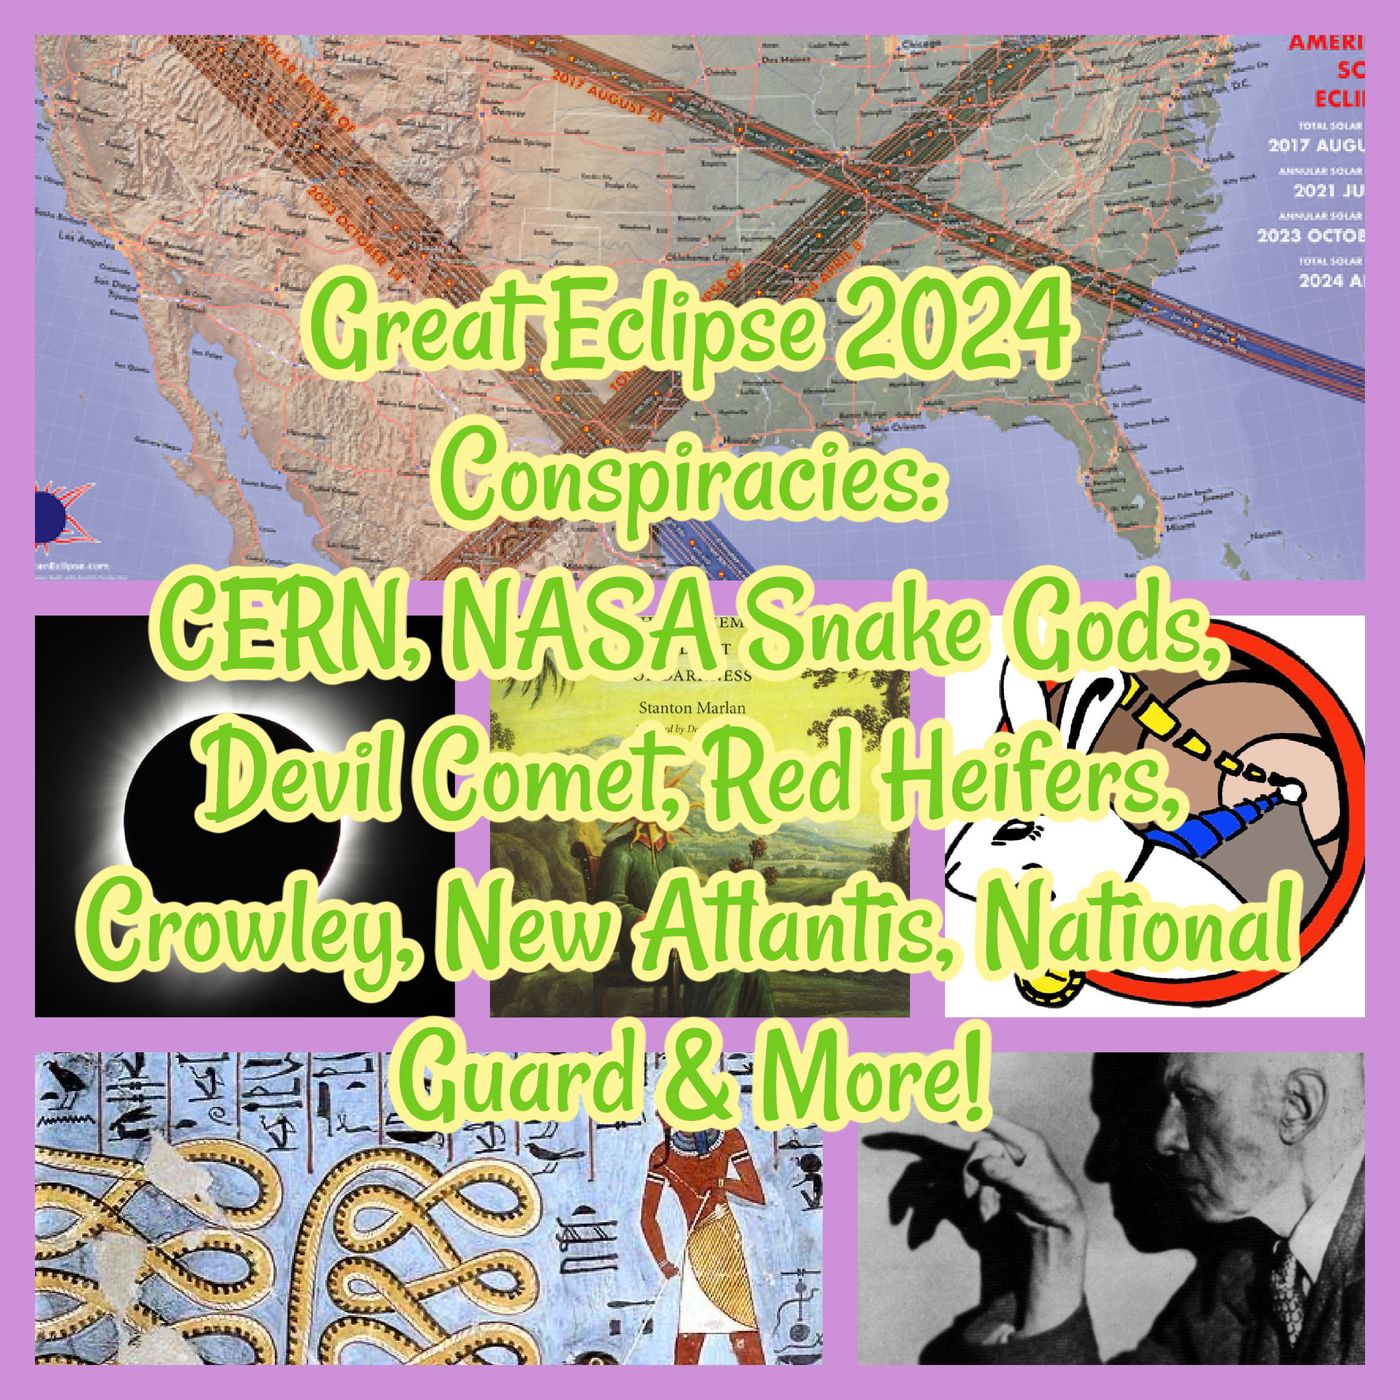 Great Eclipse 2024 Conspiracies: CERN, NASA Snake Gods, Devil Comet, Red Heifers, Crowley, New Atlantis, National Guard & More!